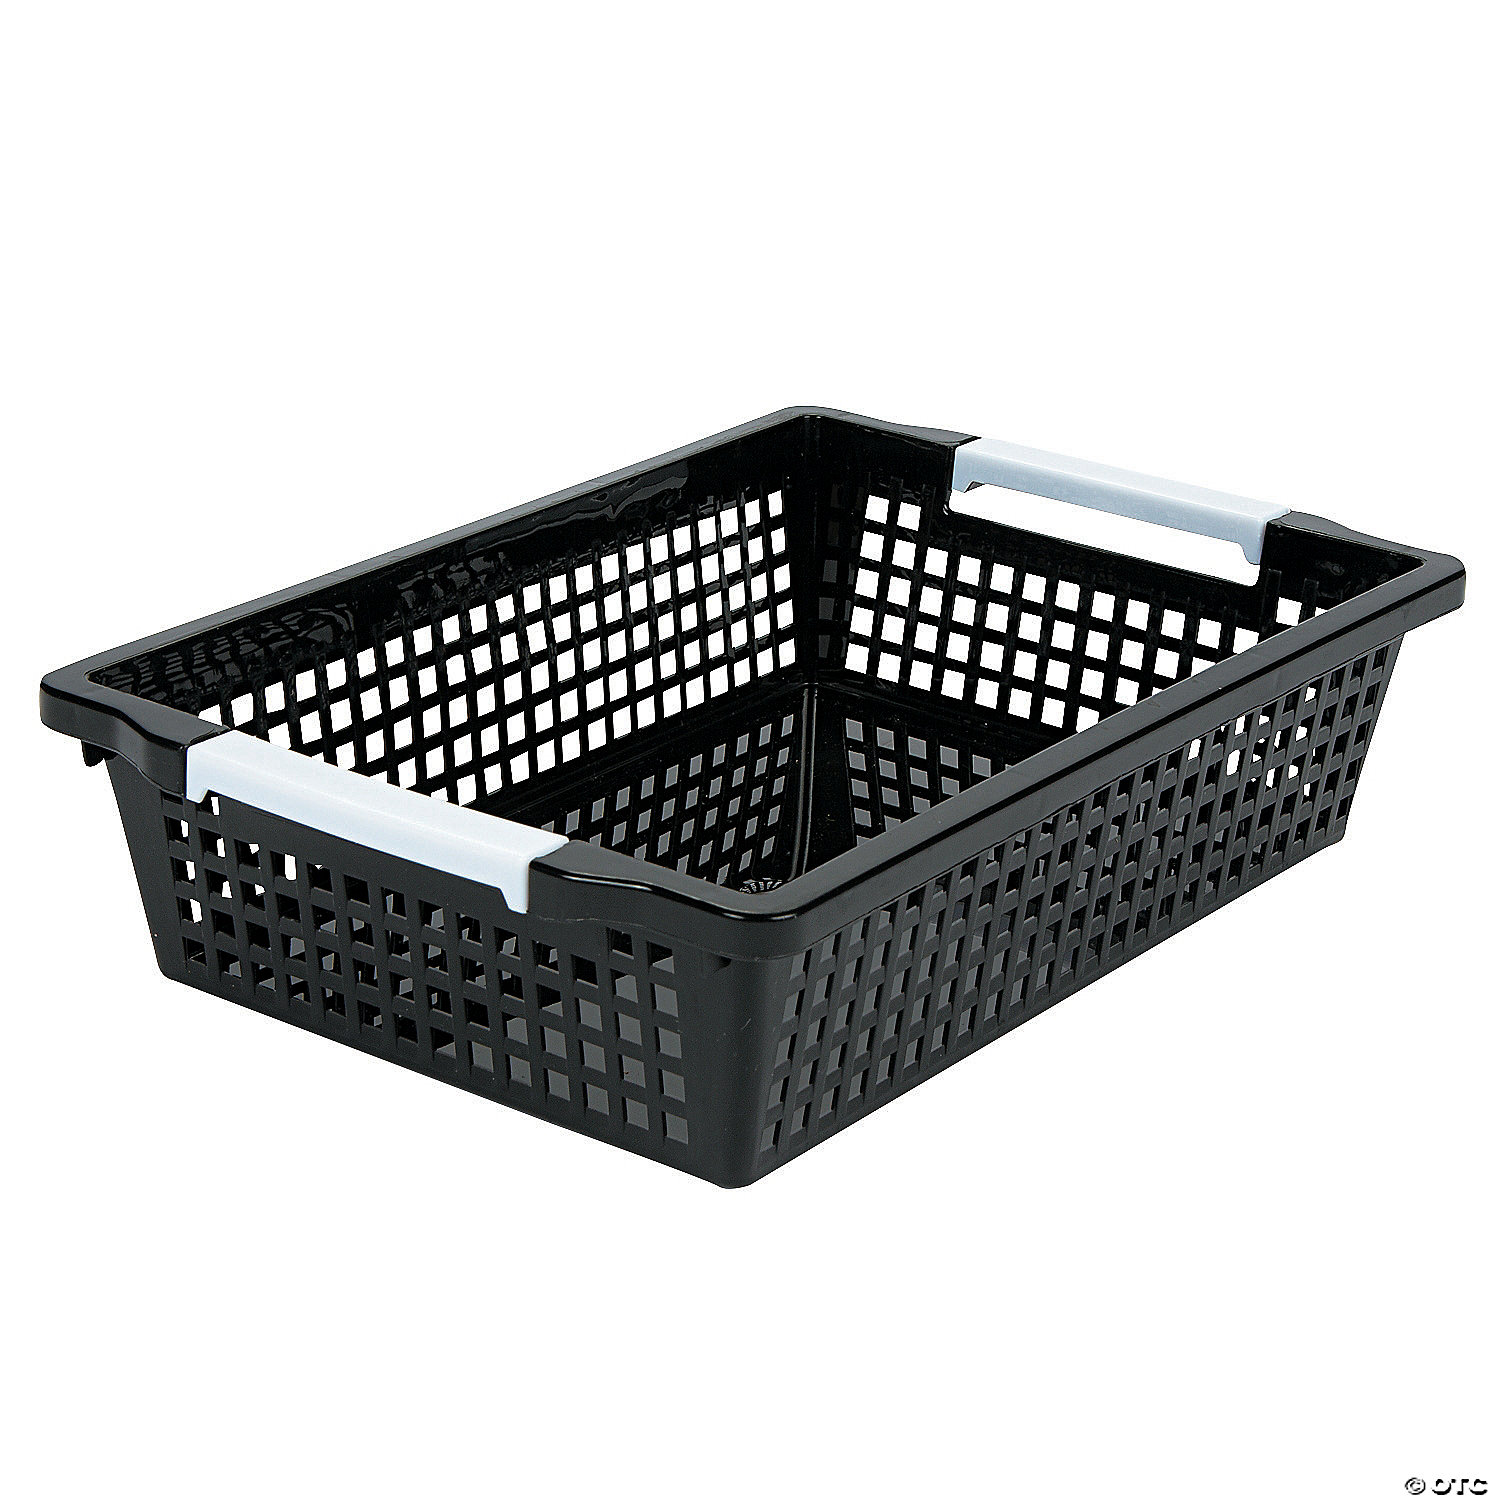 small storage baskets